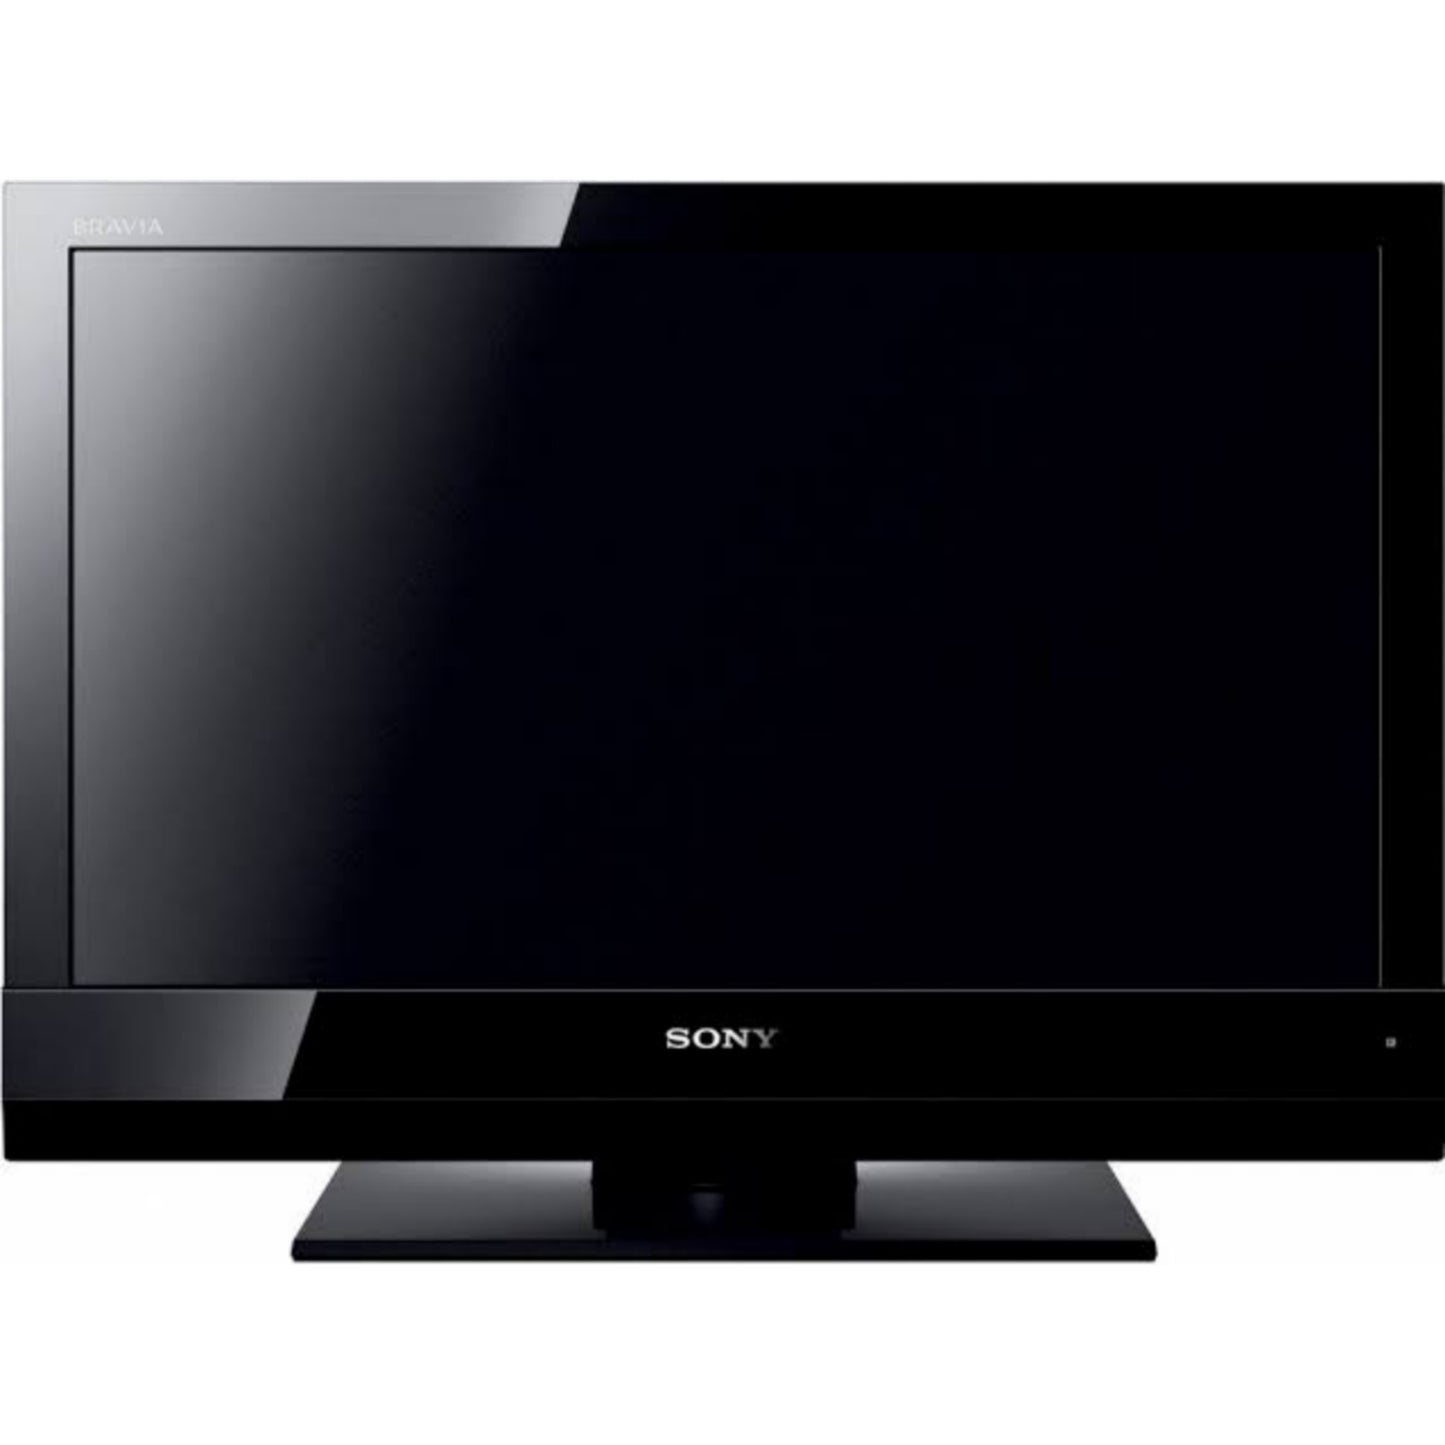 Sony BRAVIA 22 Inch KDL-22BX200B Full HD LCD TV - London Used